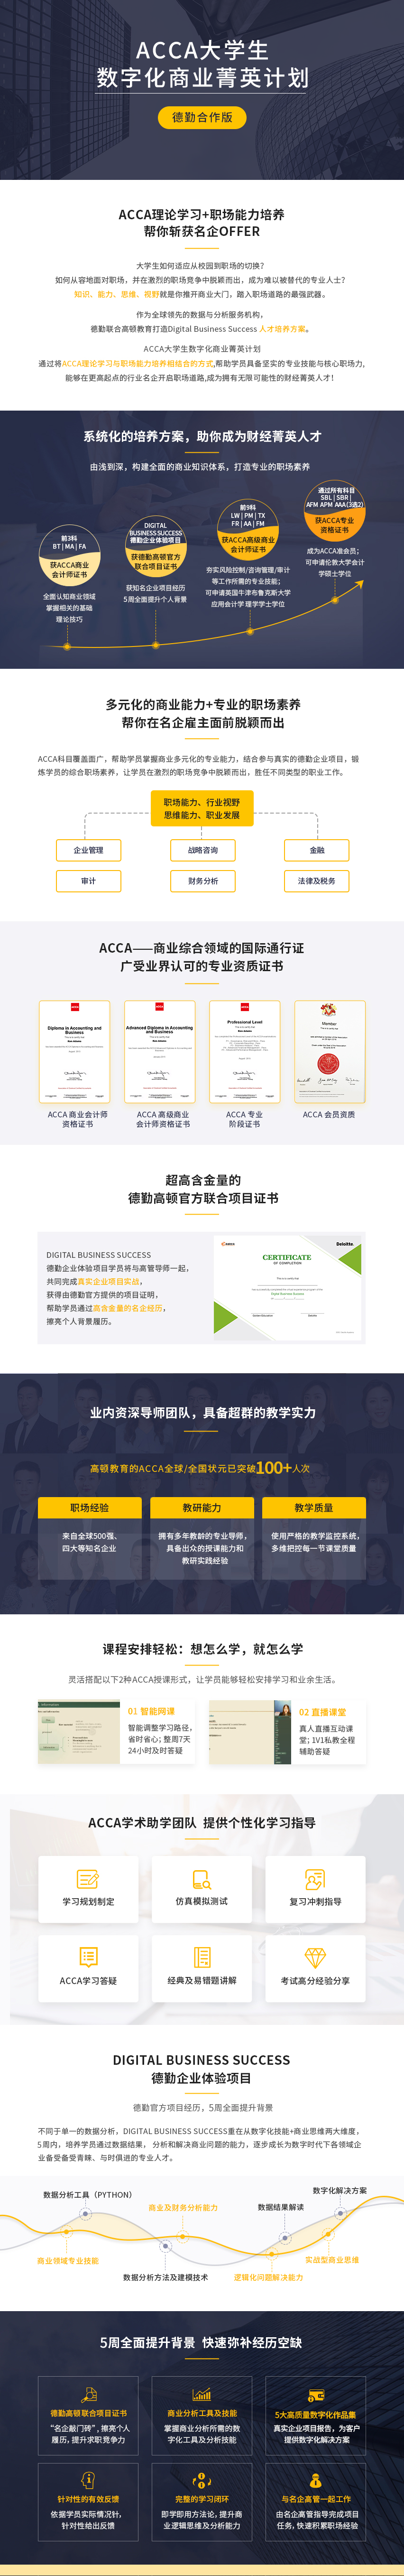 https://simg01.gaodunwangxiao.com/uploadfiles/product-center/202209/07/f55f9_20220907103552.png